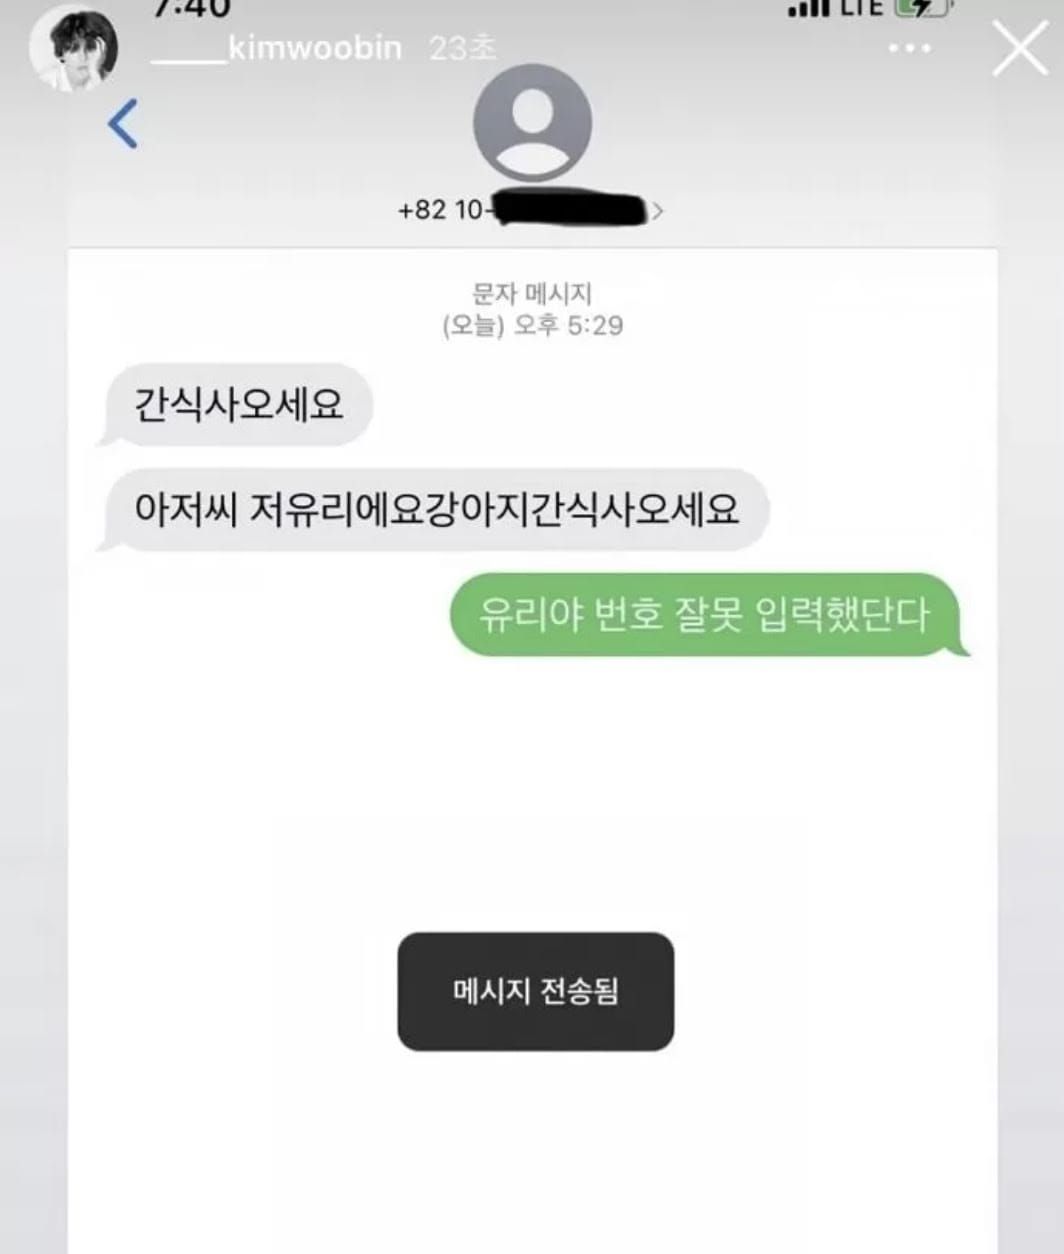 Aktor Kim Woo Bin baru-baru ini mengunggah tangkapan layar dari pertukaran yang menggemaskan yang ia bagikan dengan seorang anak kecil yang secara tidak sengaja mengirim sms nomor yang salah, yang kebetulan menjadi nomor telepon pribadi sang aktor.